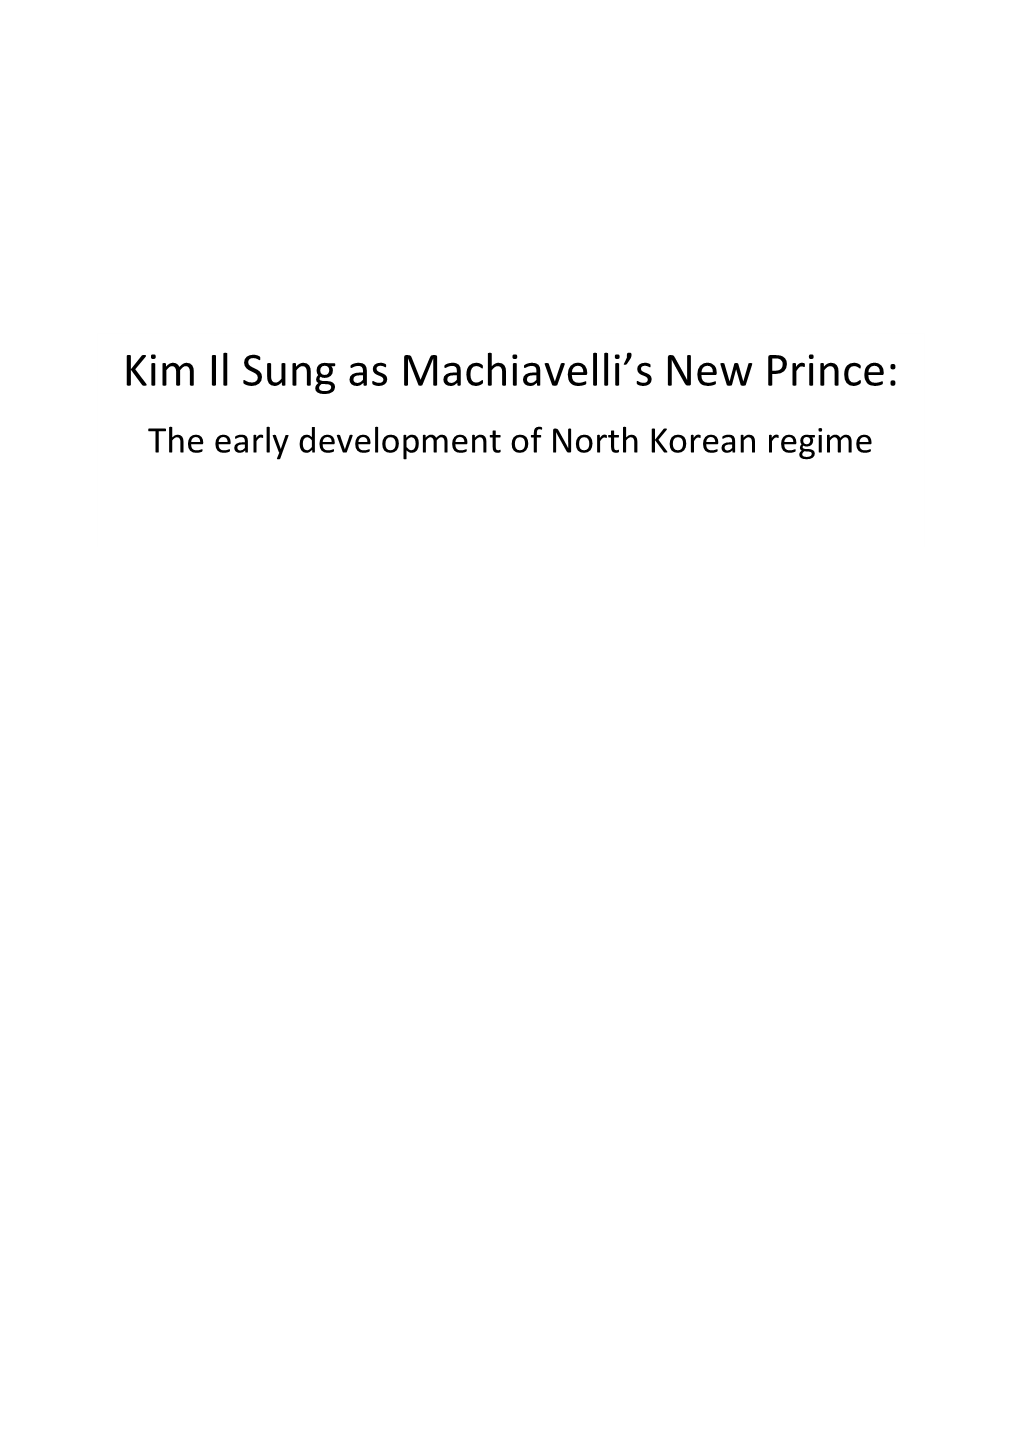 Kim Il Sung As Machiavelli's New Prince